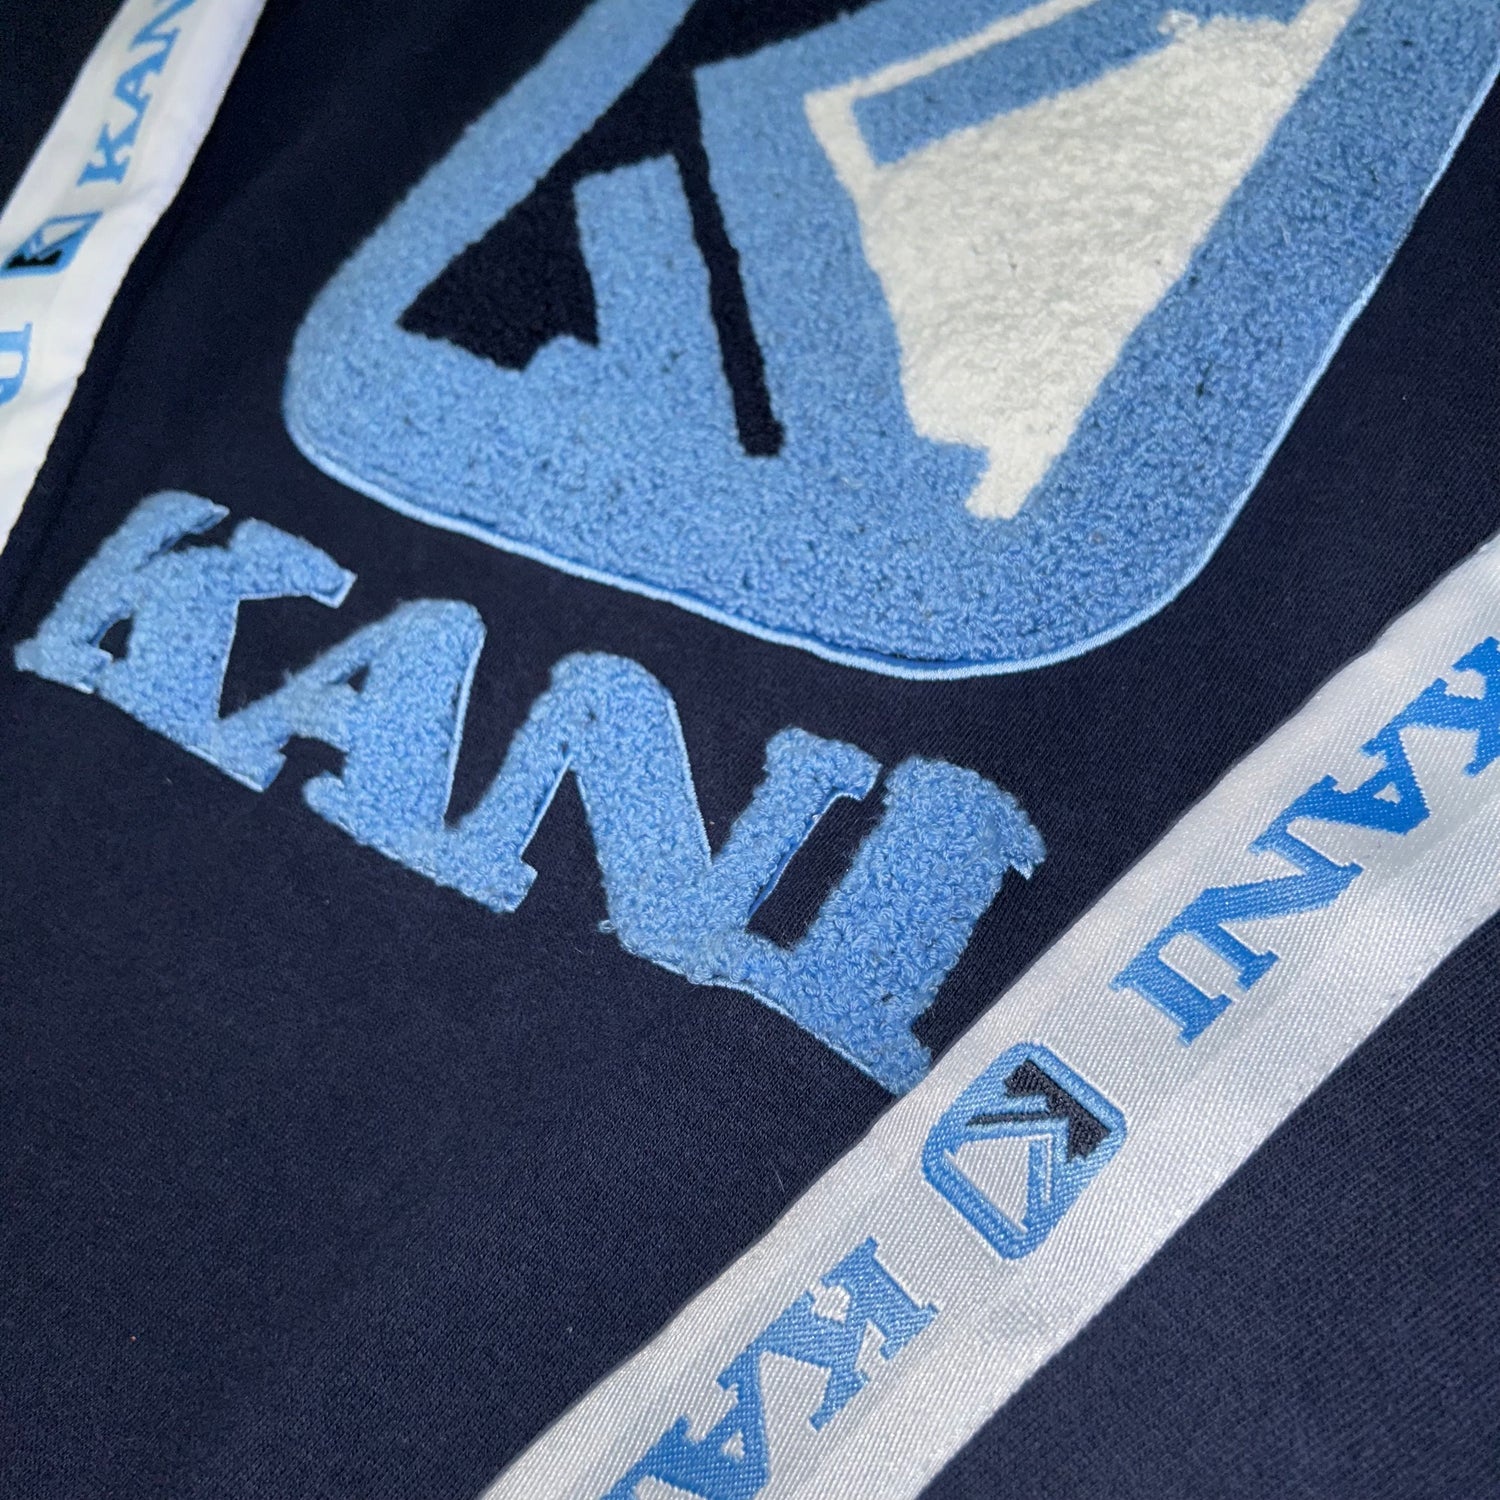 Kani Jeans Vintage Sweatshirt (XL)